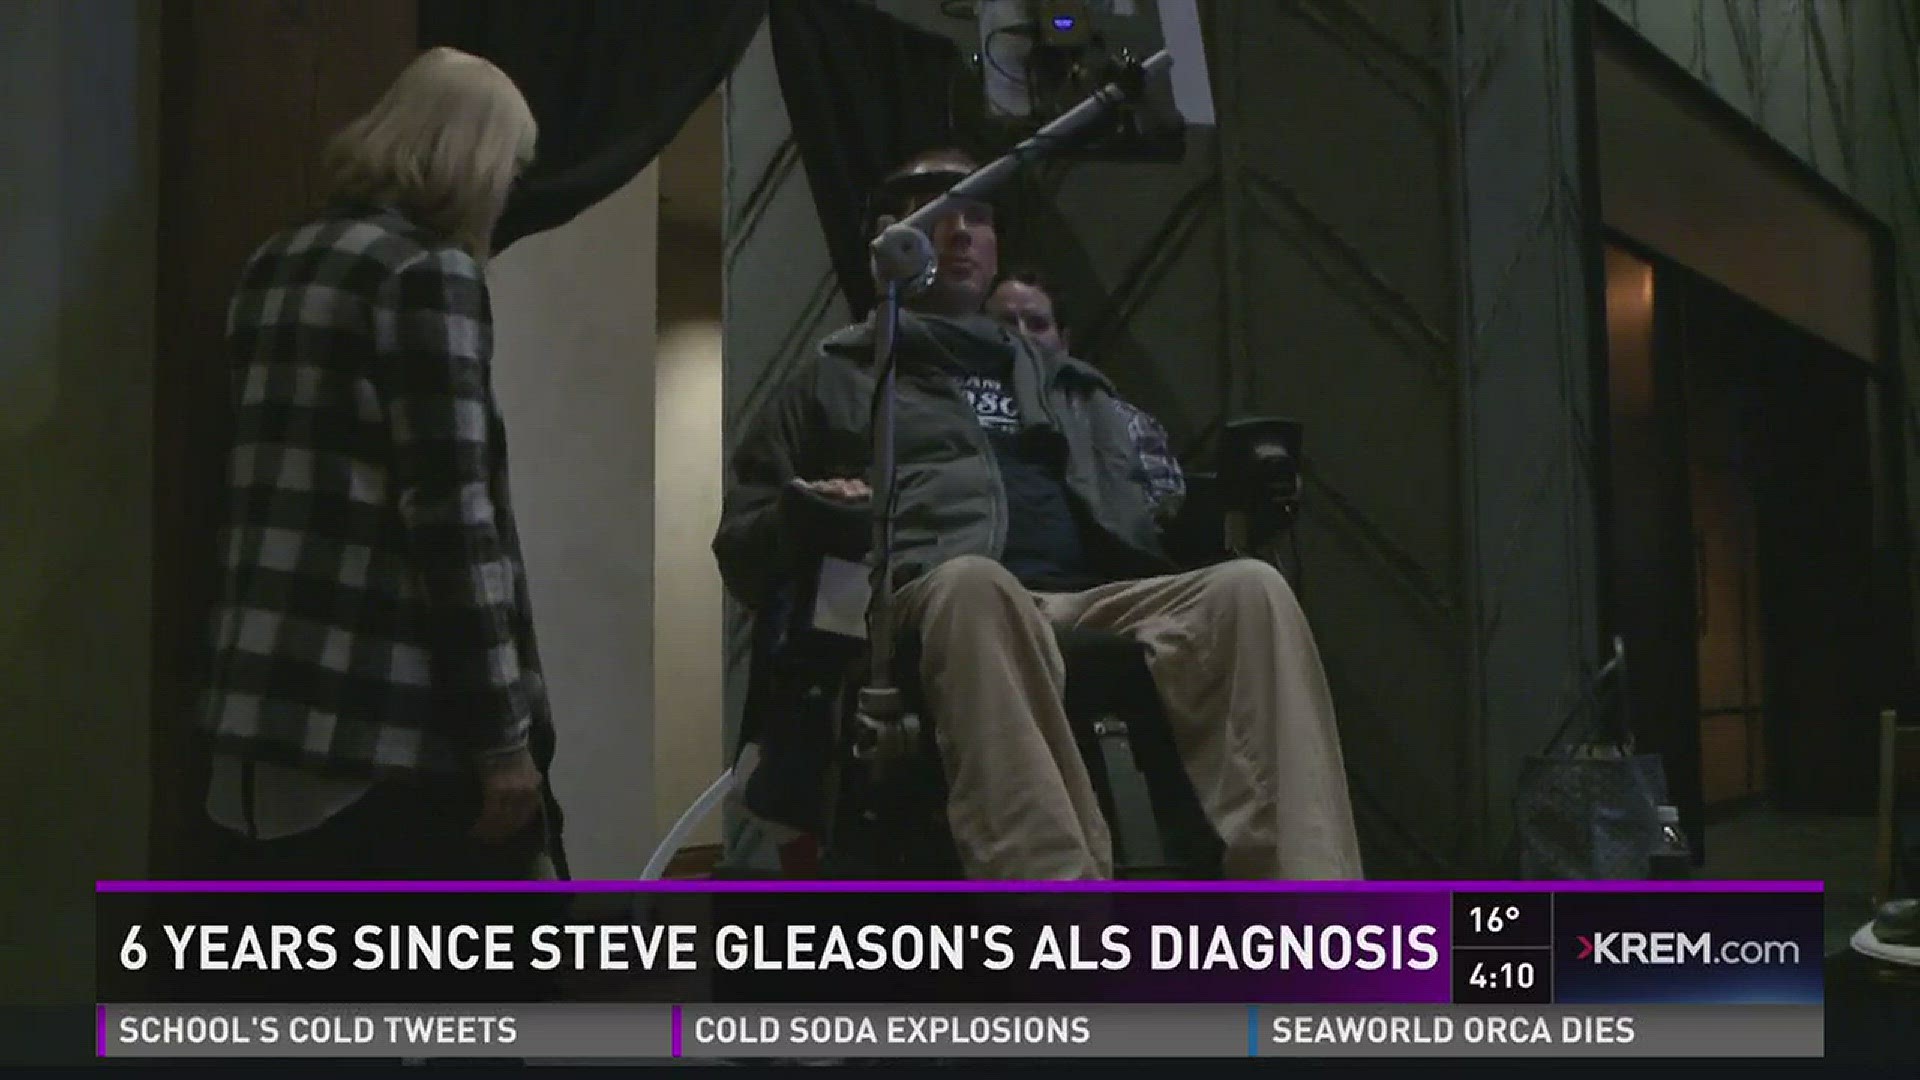 Six years since Steve Gleason's ALS diagnosis